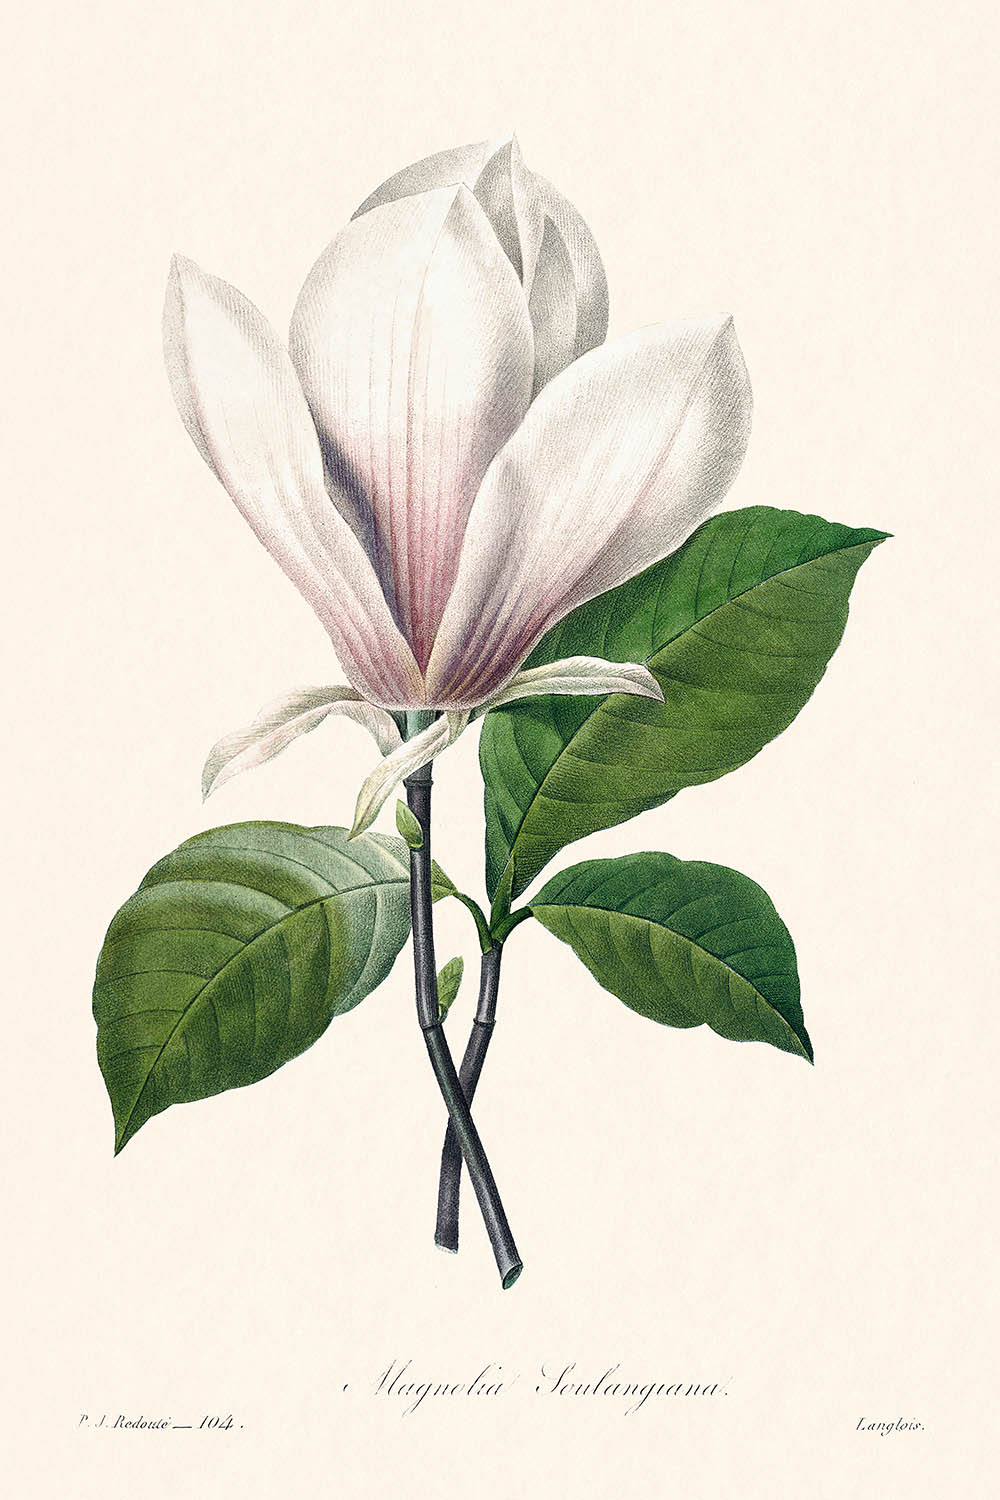 Magnolia Soulangiana Botanical Illustration by Pierre-Joseph Redouté, 1827